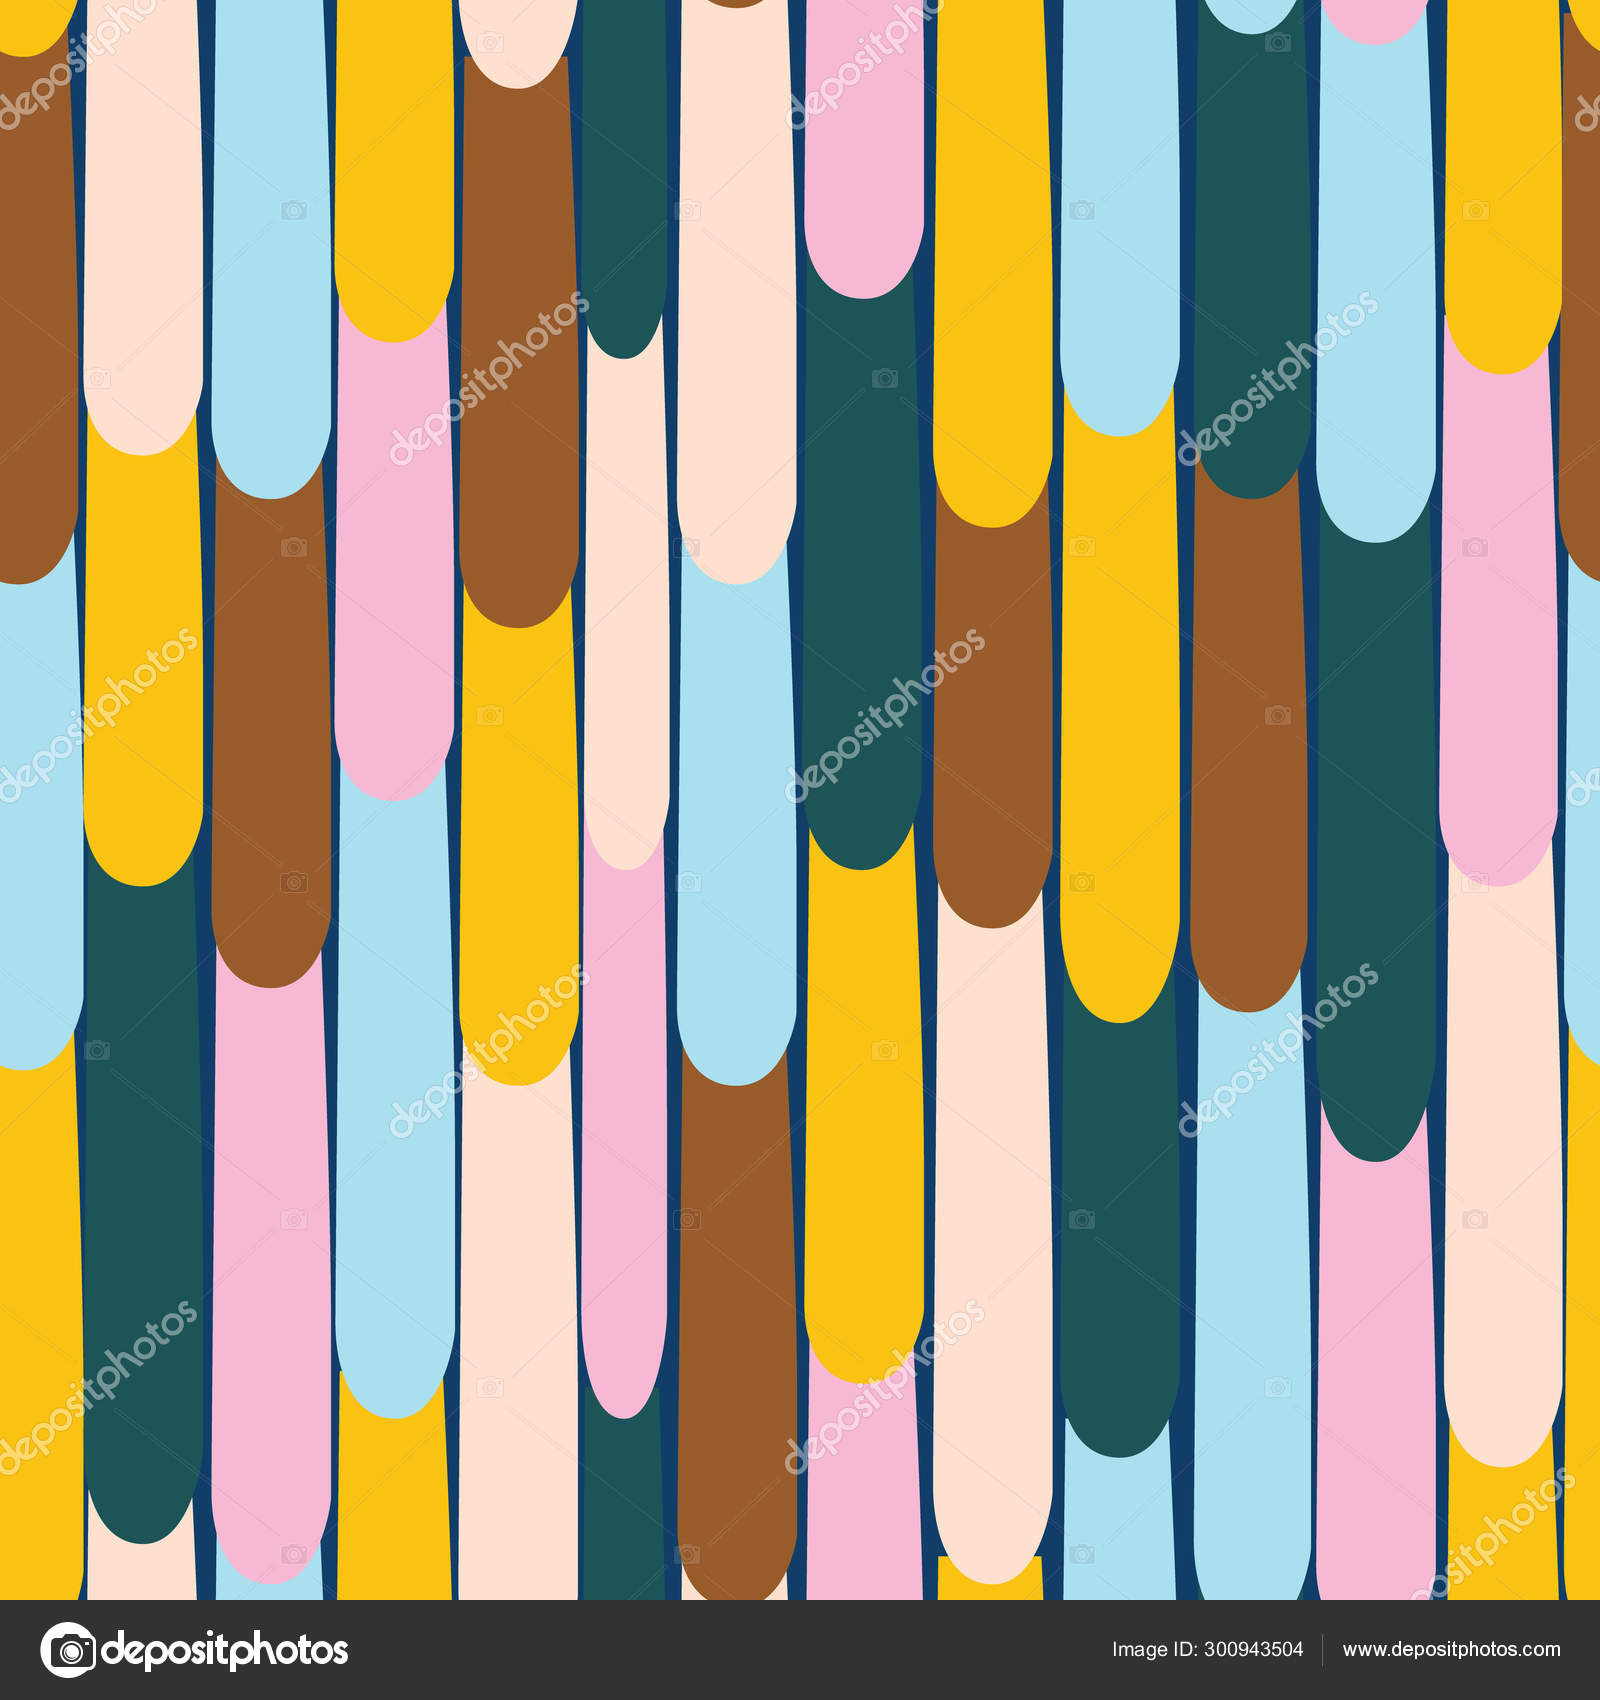 Dark blue colorful popsicle sticks seamless pattern background